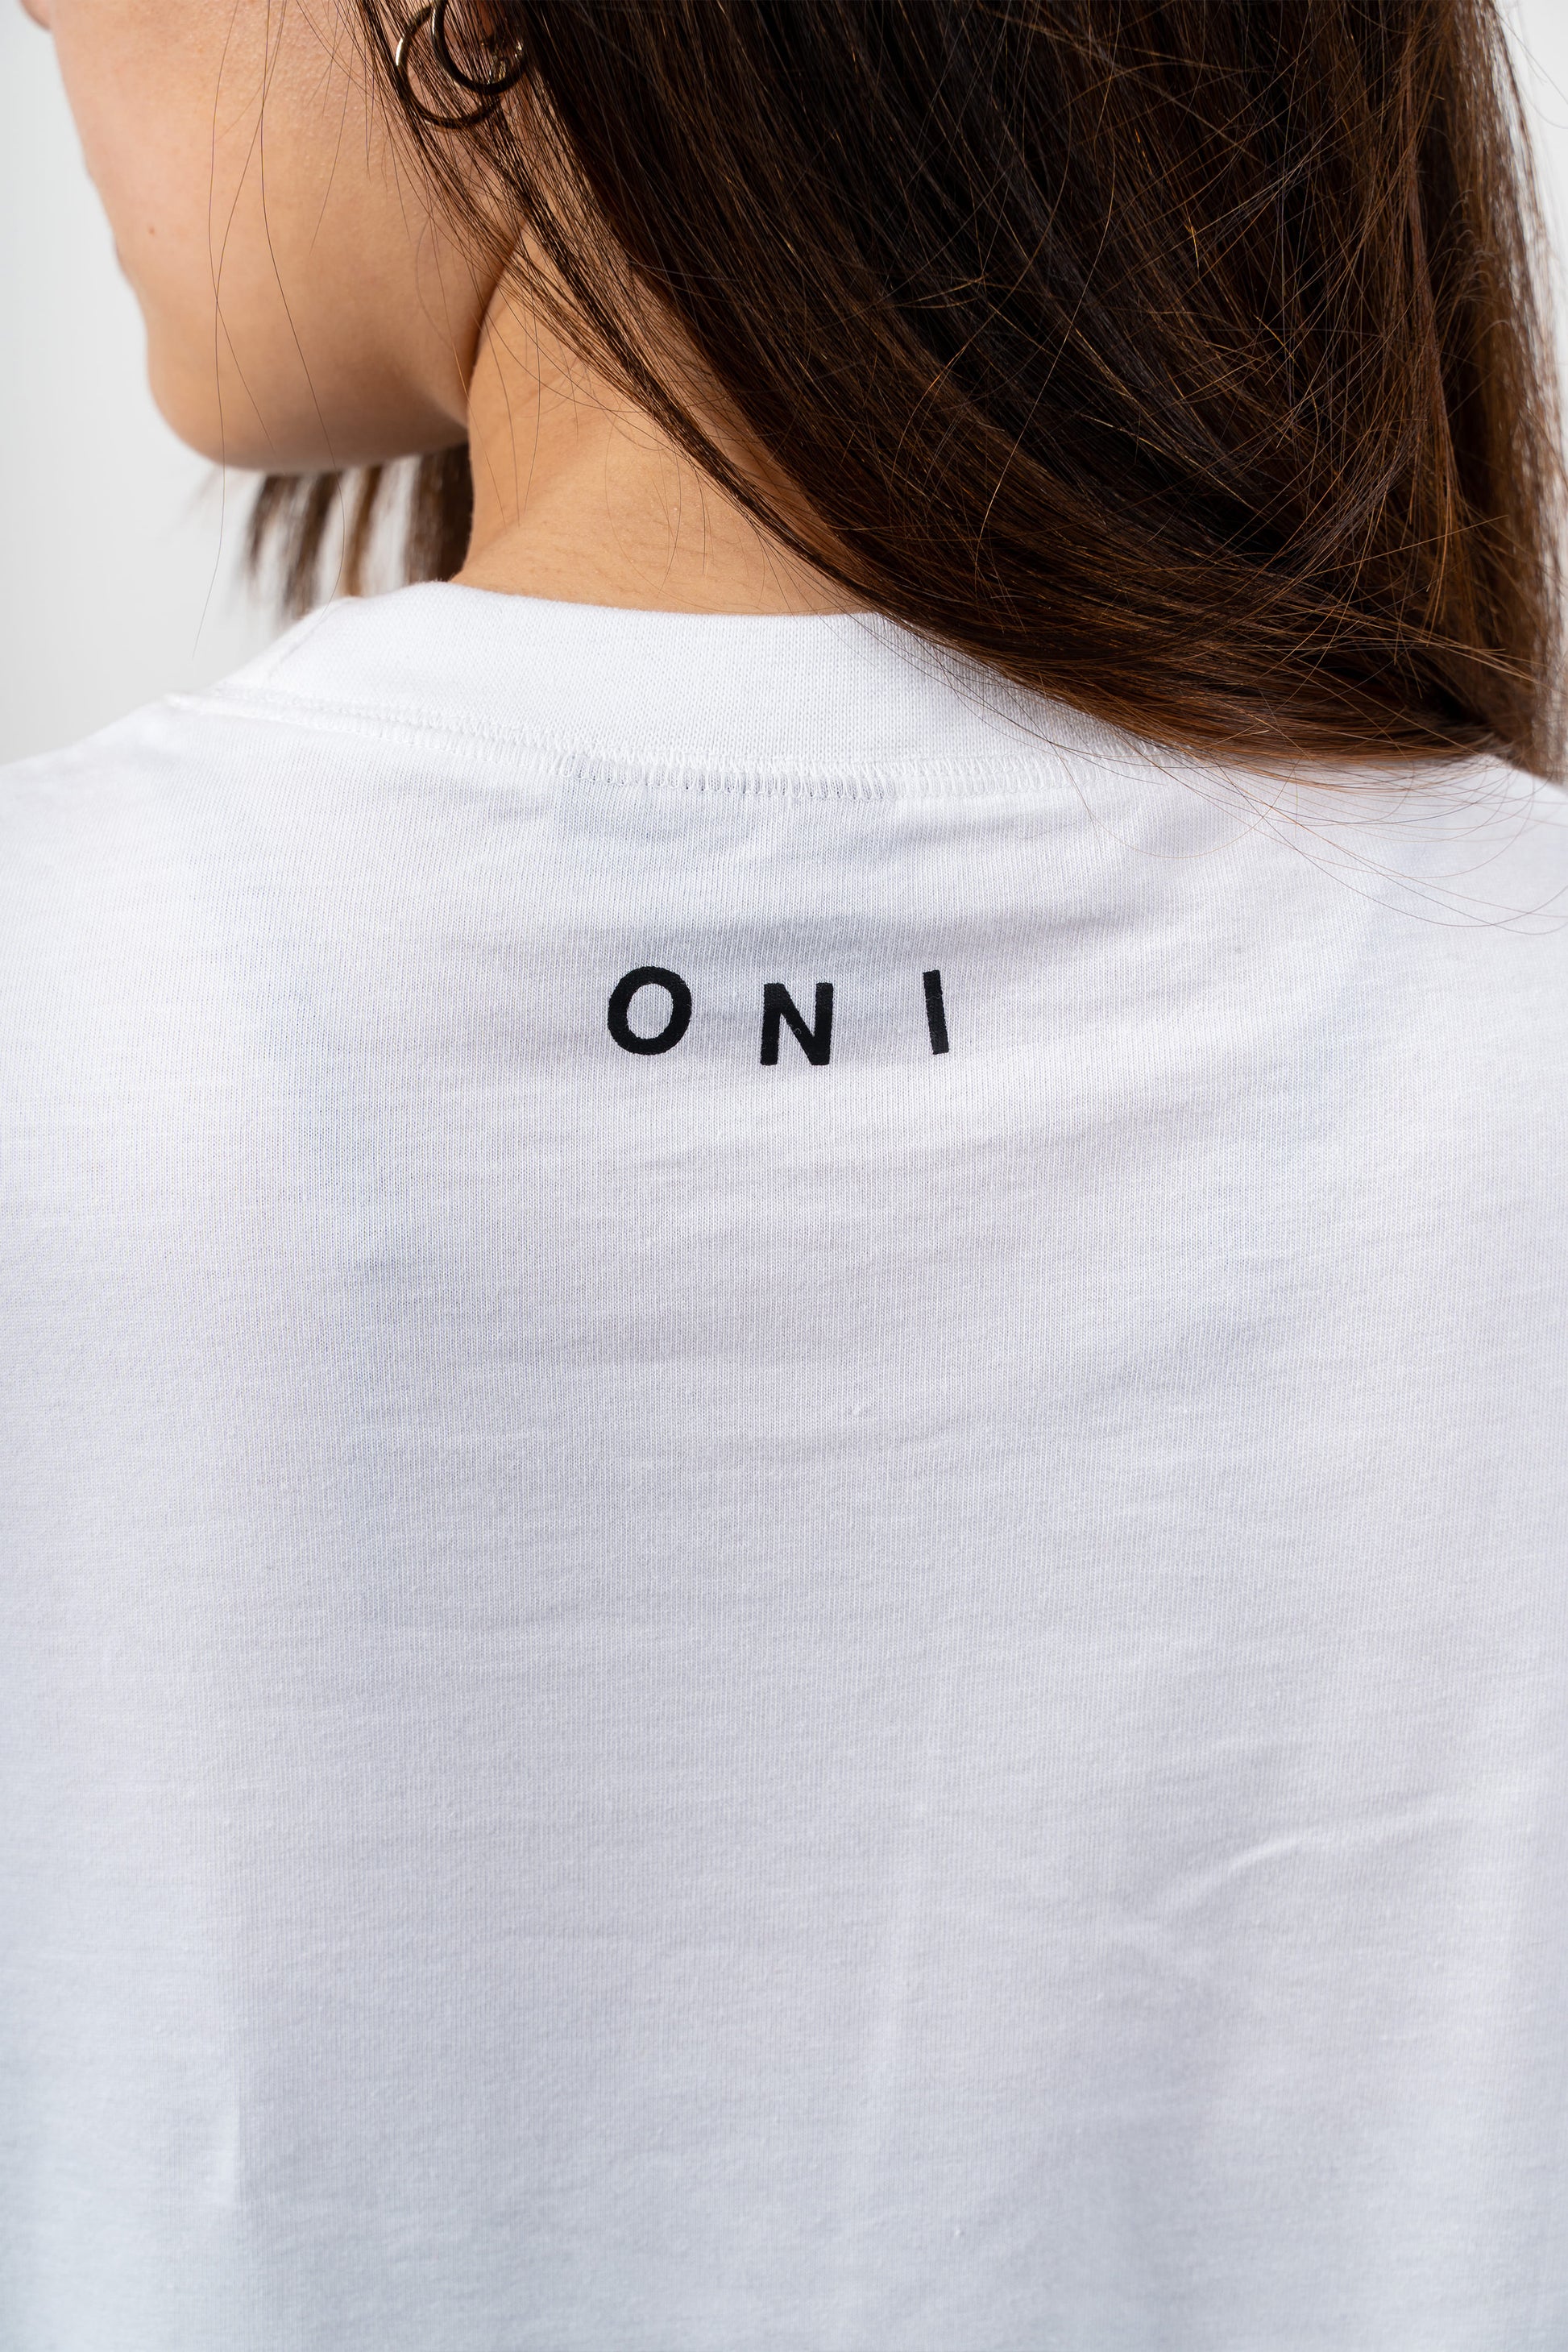 Zoom sur logo Oni tee shirt Raku blanc et noir